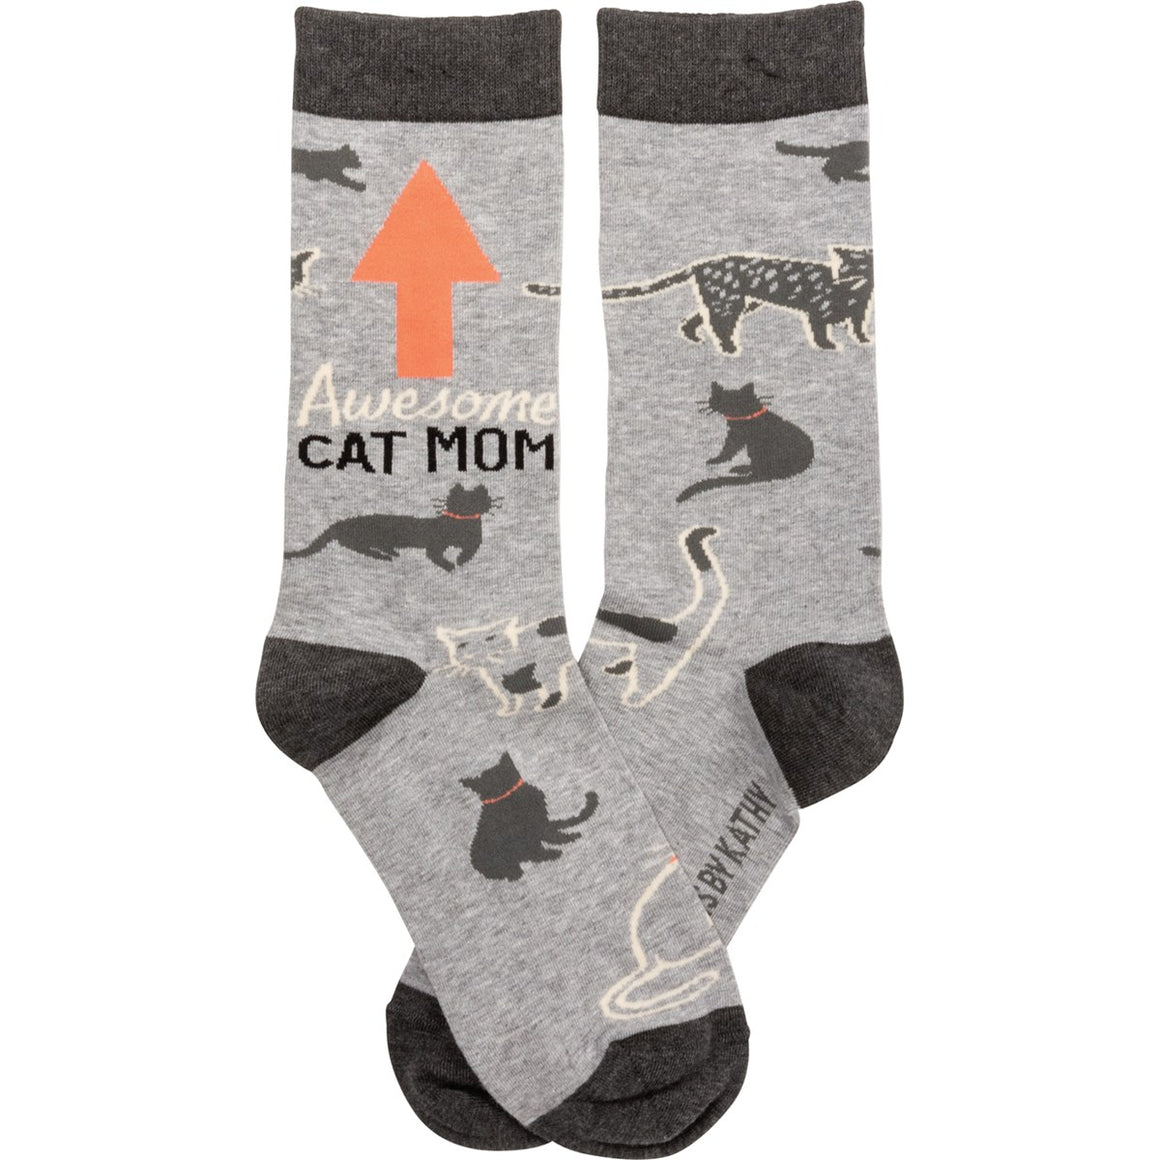 Awesome Cat Mom Socks